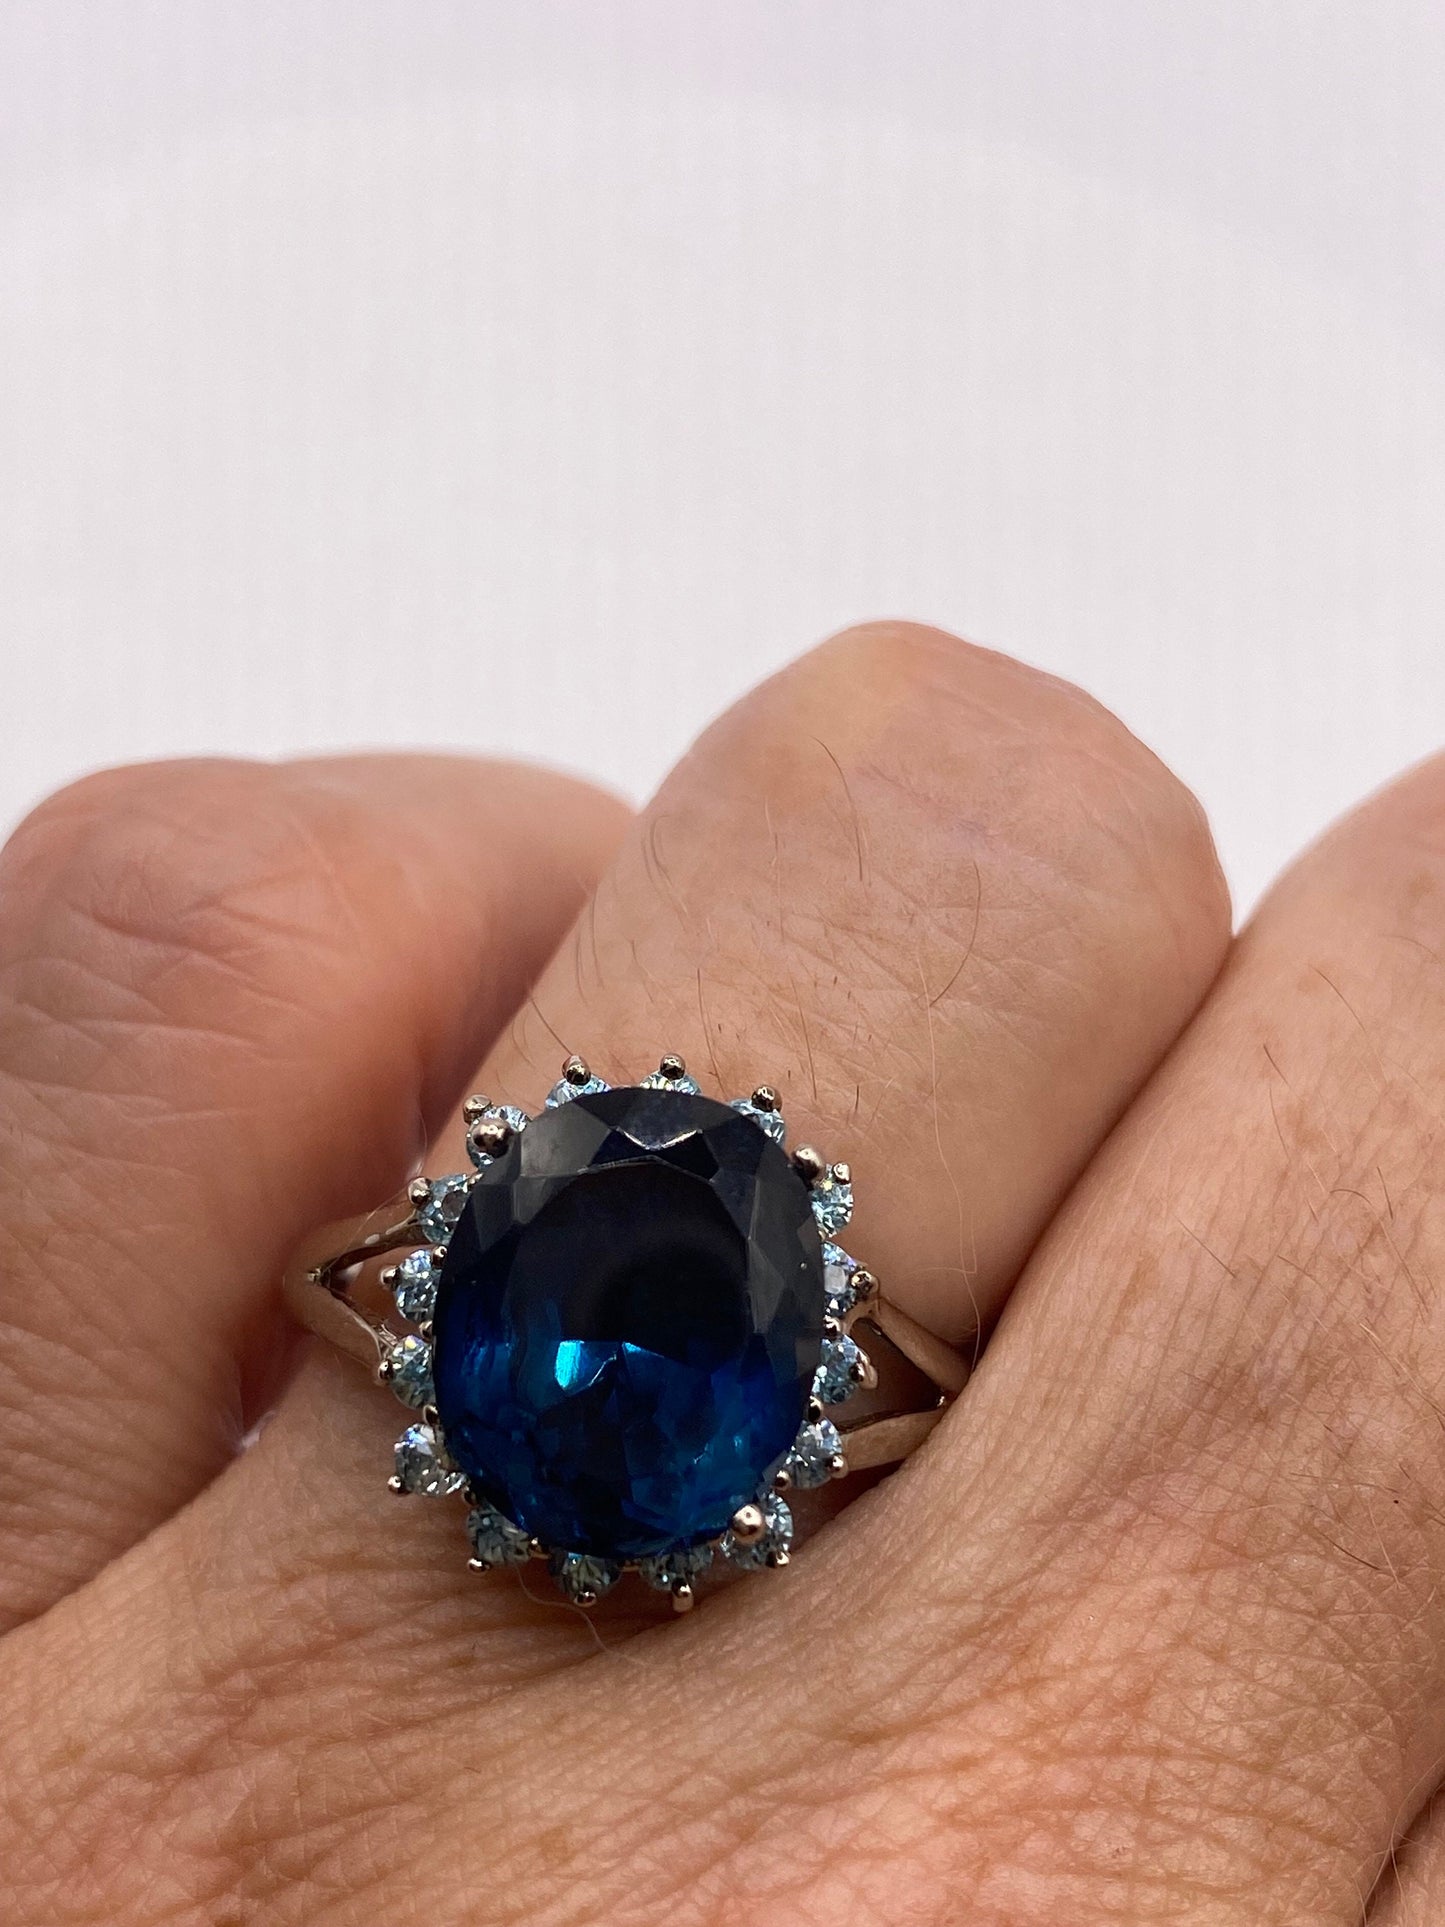 Vintage geniune blue iolite and topaz 925 sterling silver Cocktail Ring